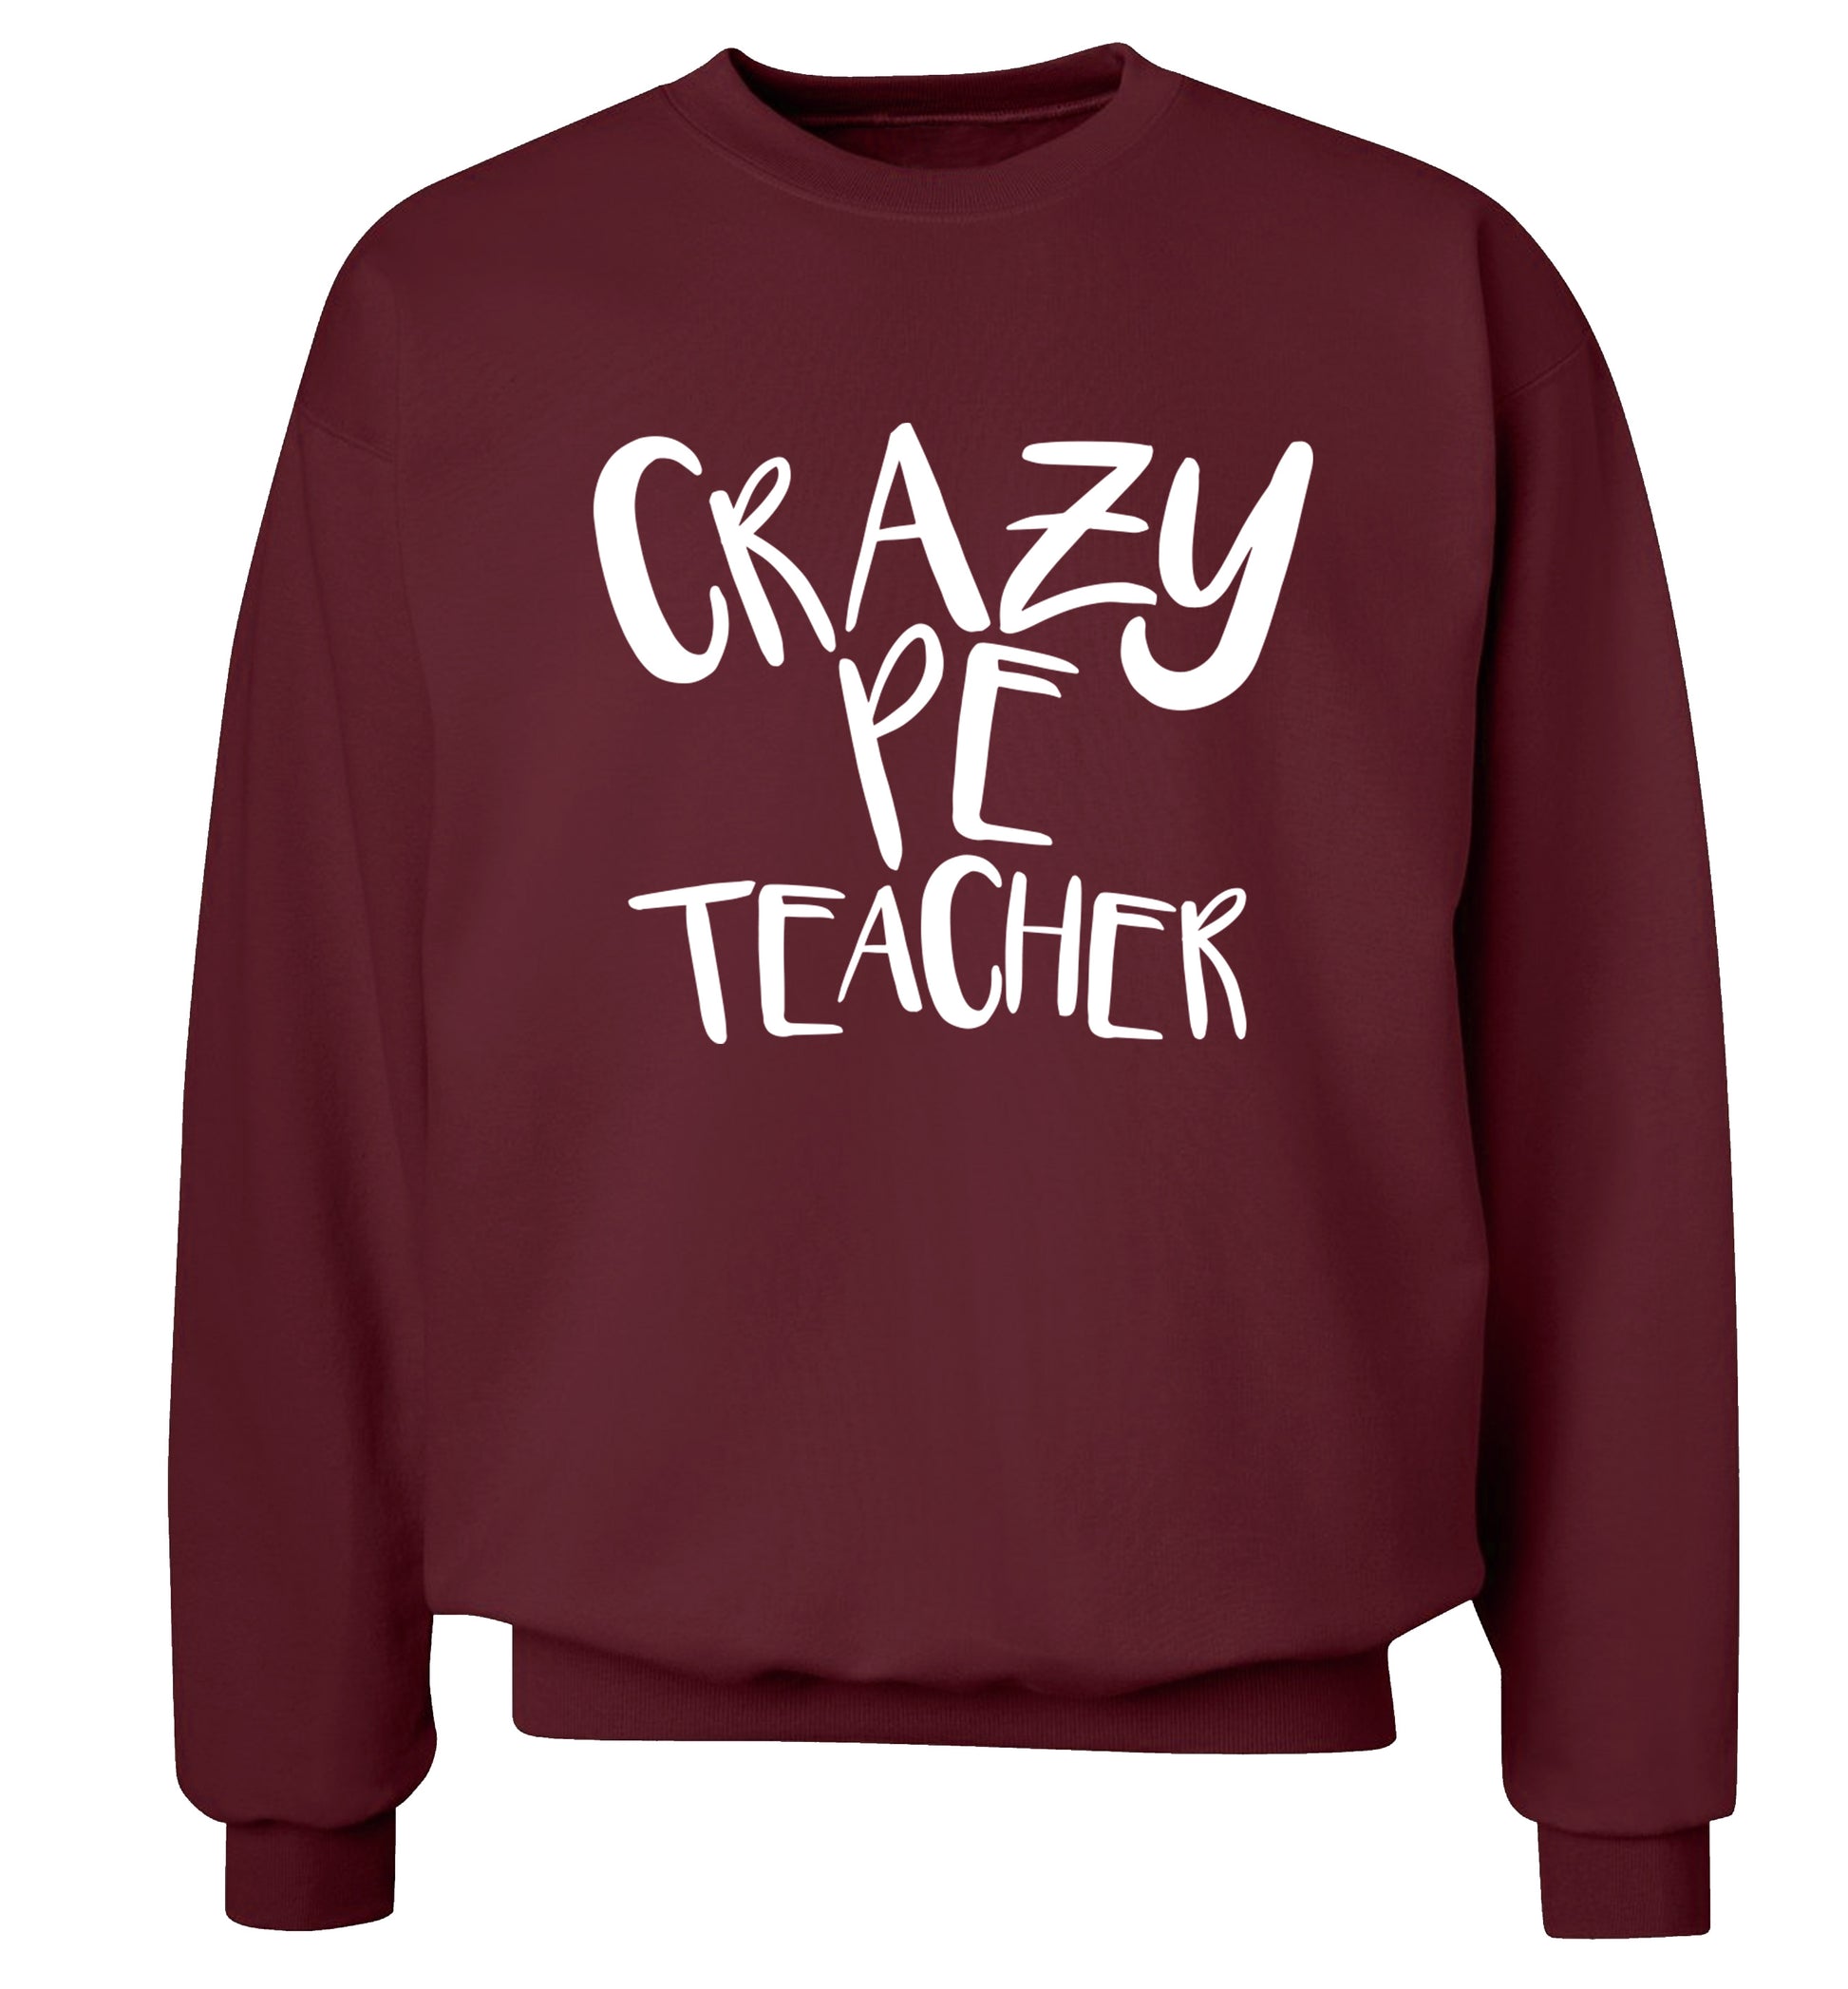 Crazy PE teacher Adult's unisex maroon Sweater 2XL